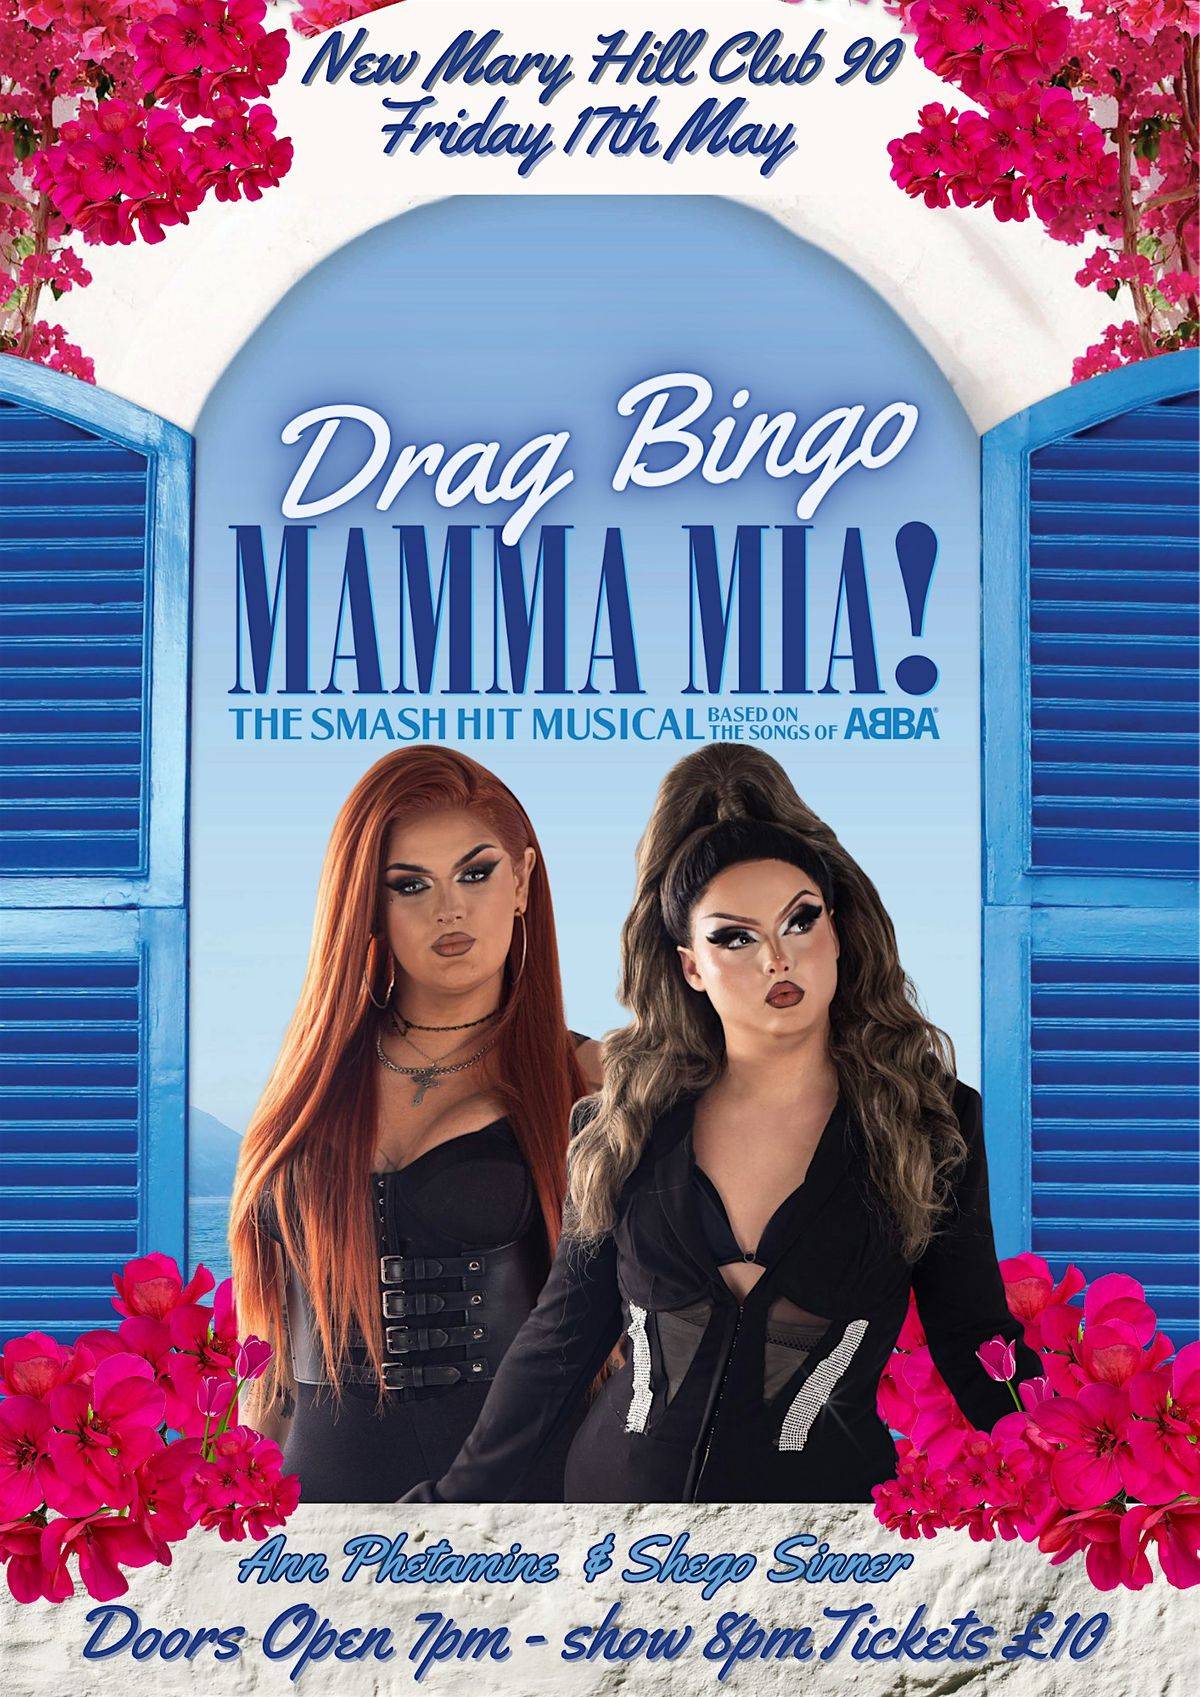 Mamma Mia Drag Bingo